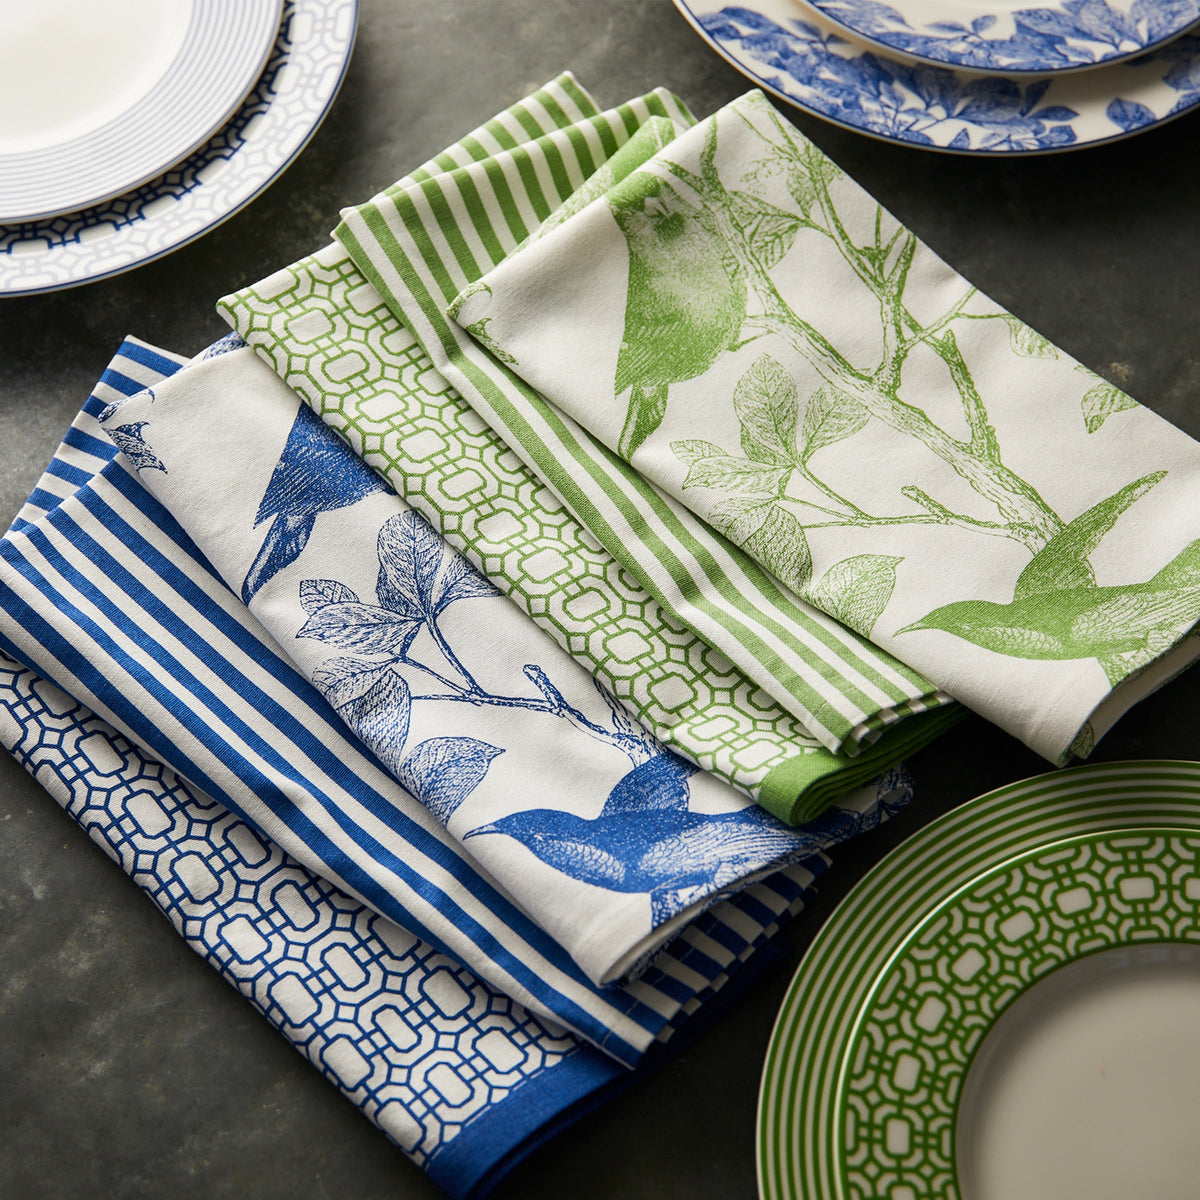 A set of versatile Caskata Pinstripe Dinner Napkins in Blue Set/4 on a table.